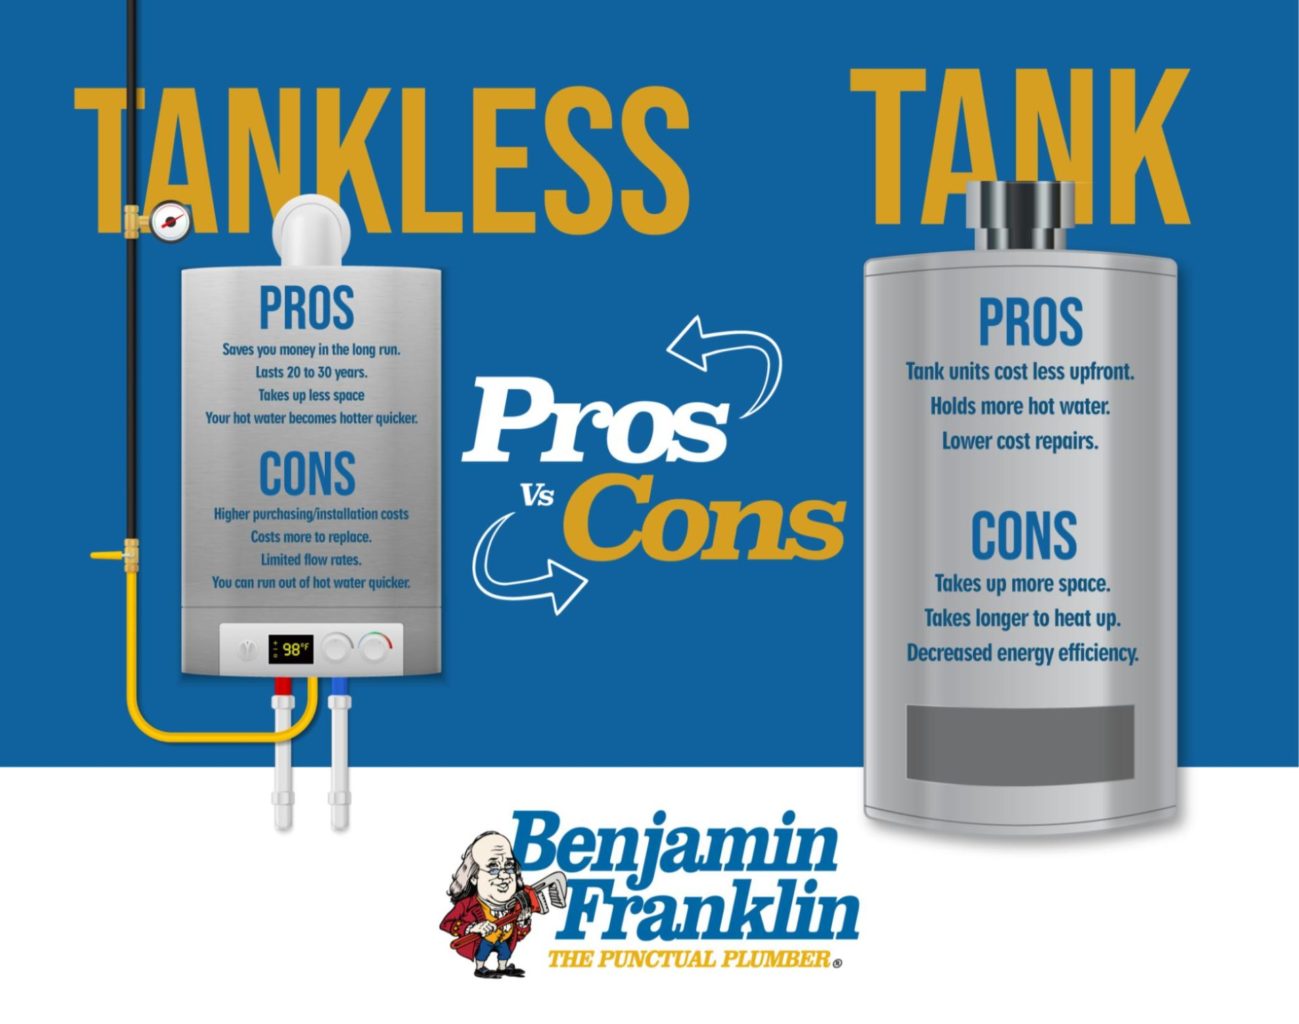 Tankless Water Heater vs Tank hot water heater. tankless water heater pros and cons, tank water heater pros and cons.